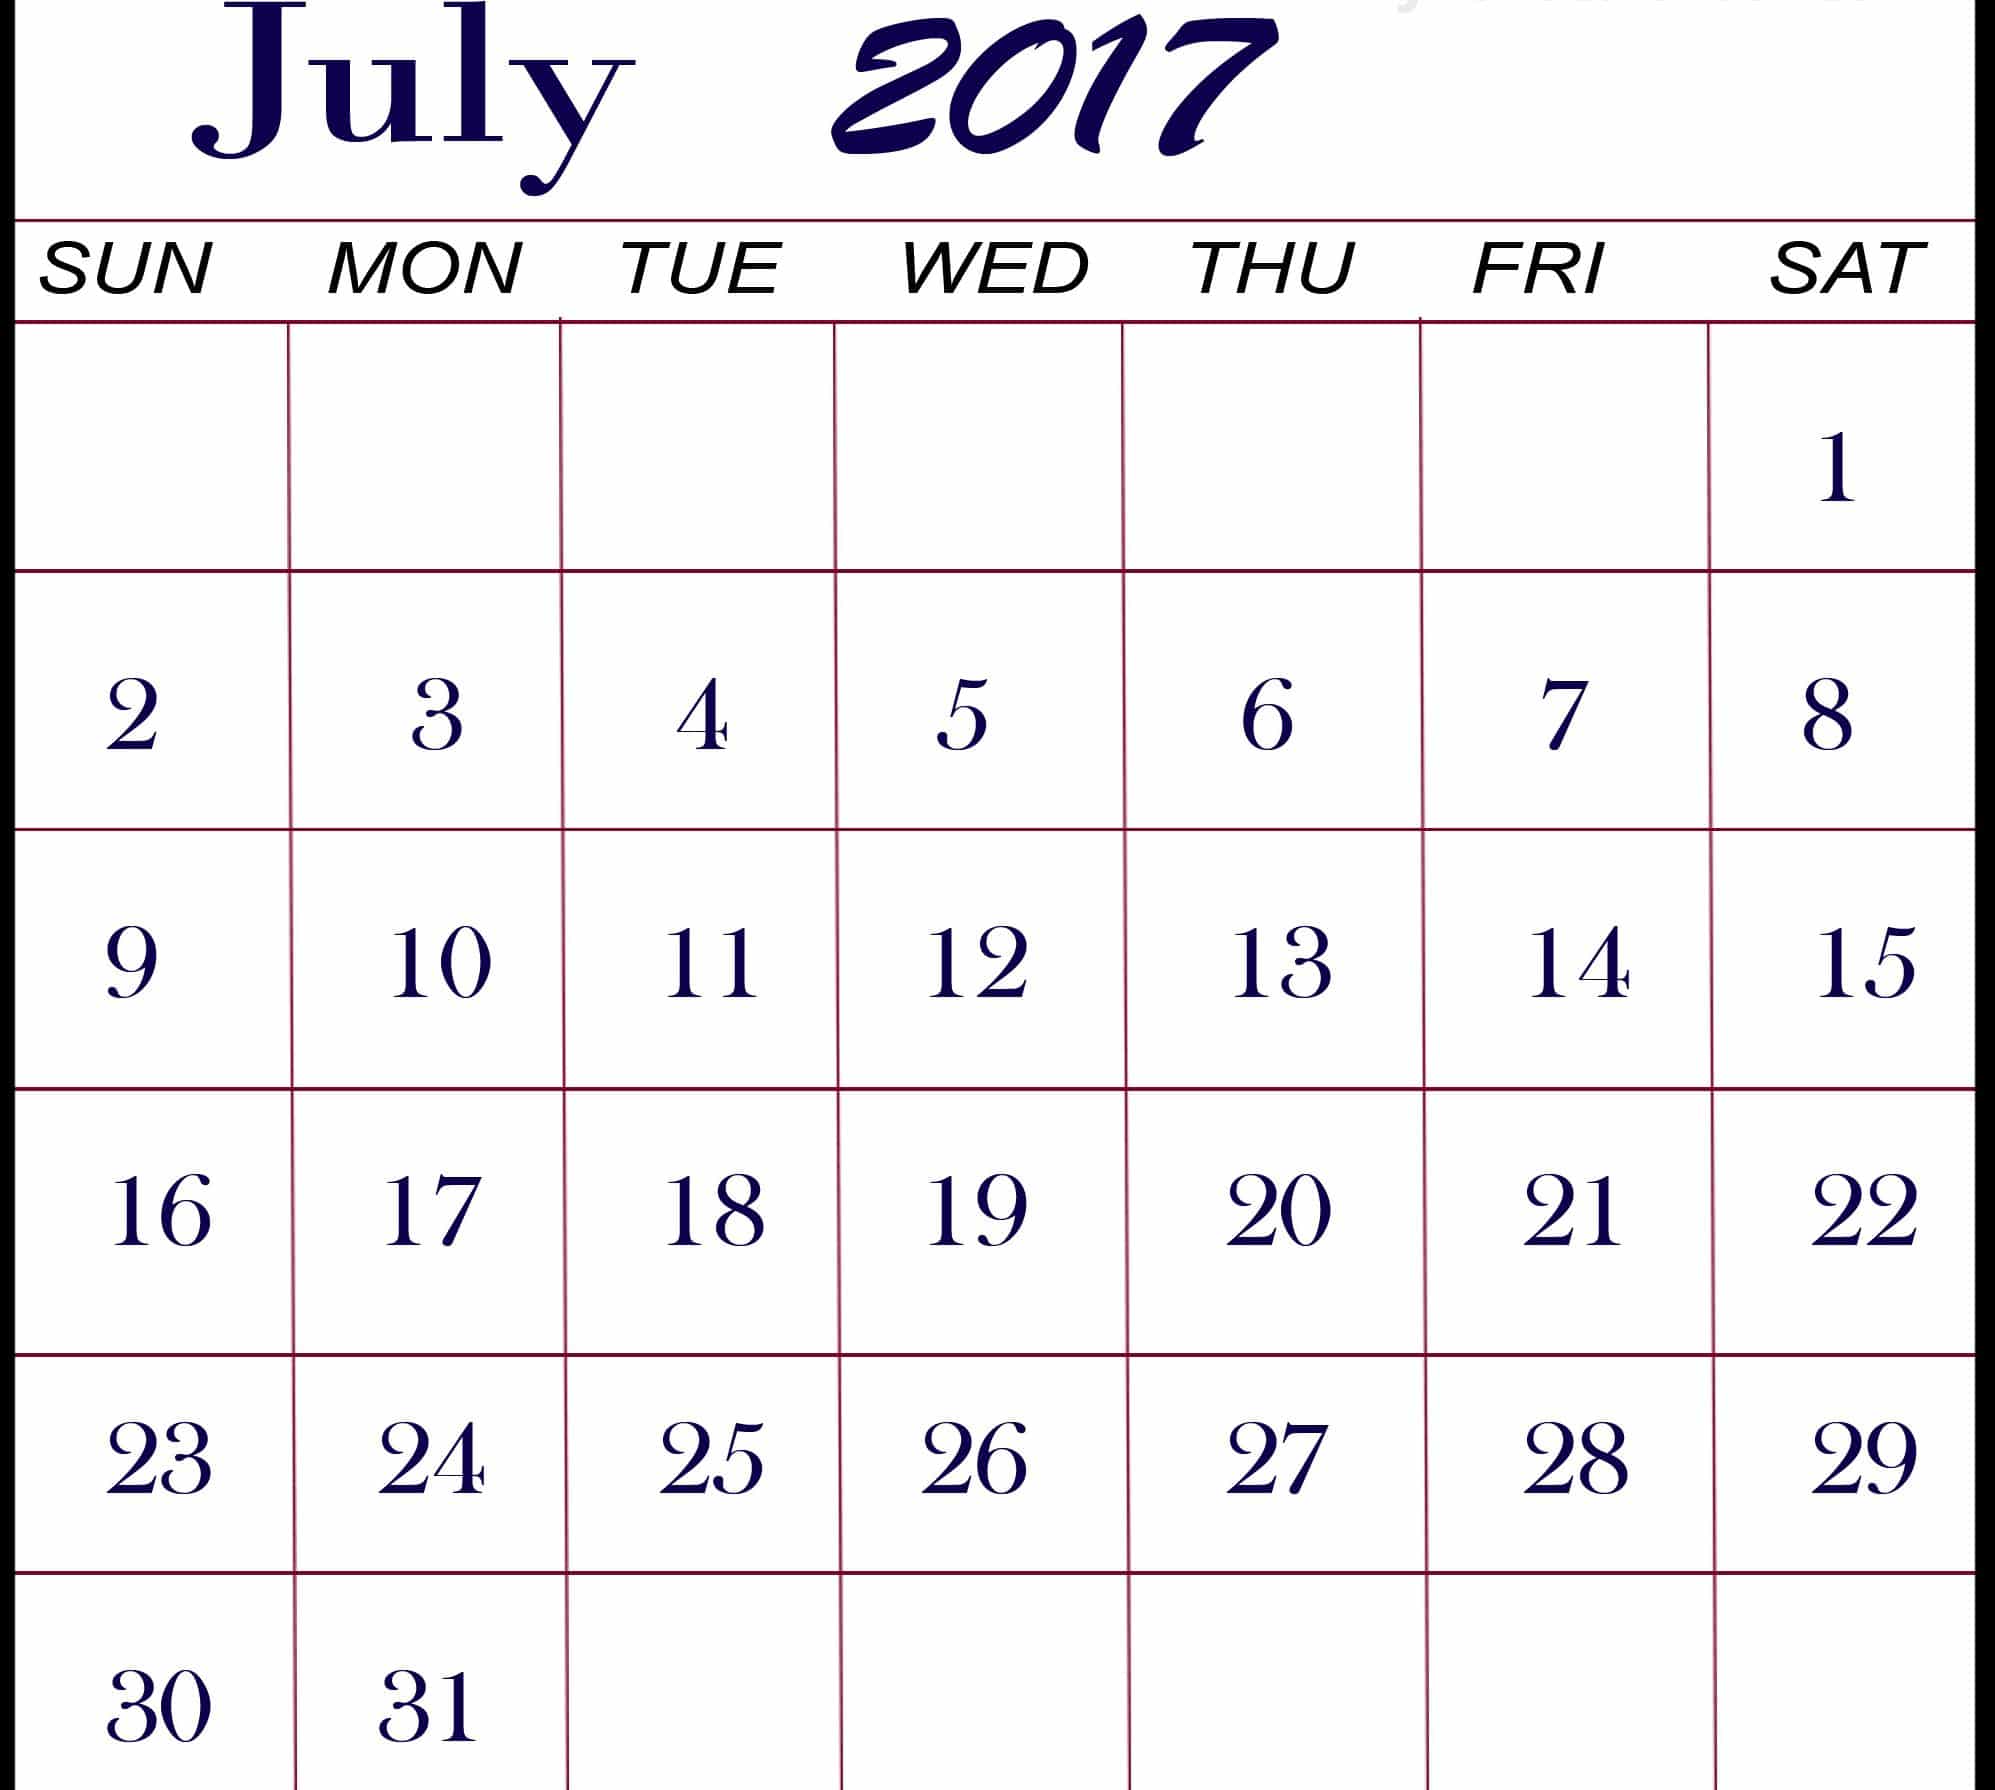 Monthly Calendar July 2017